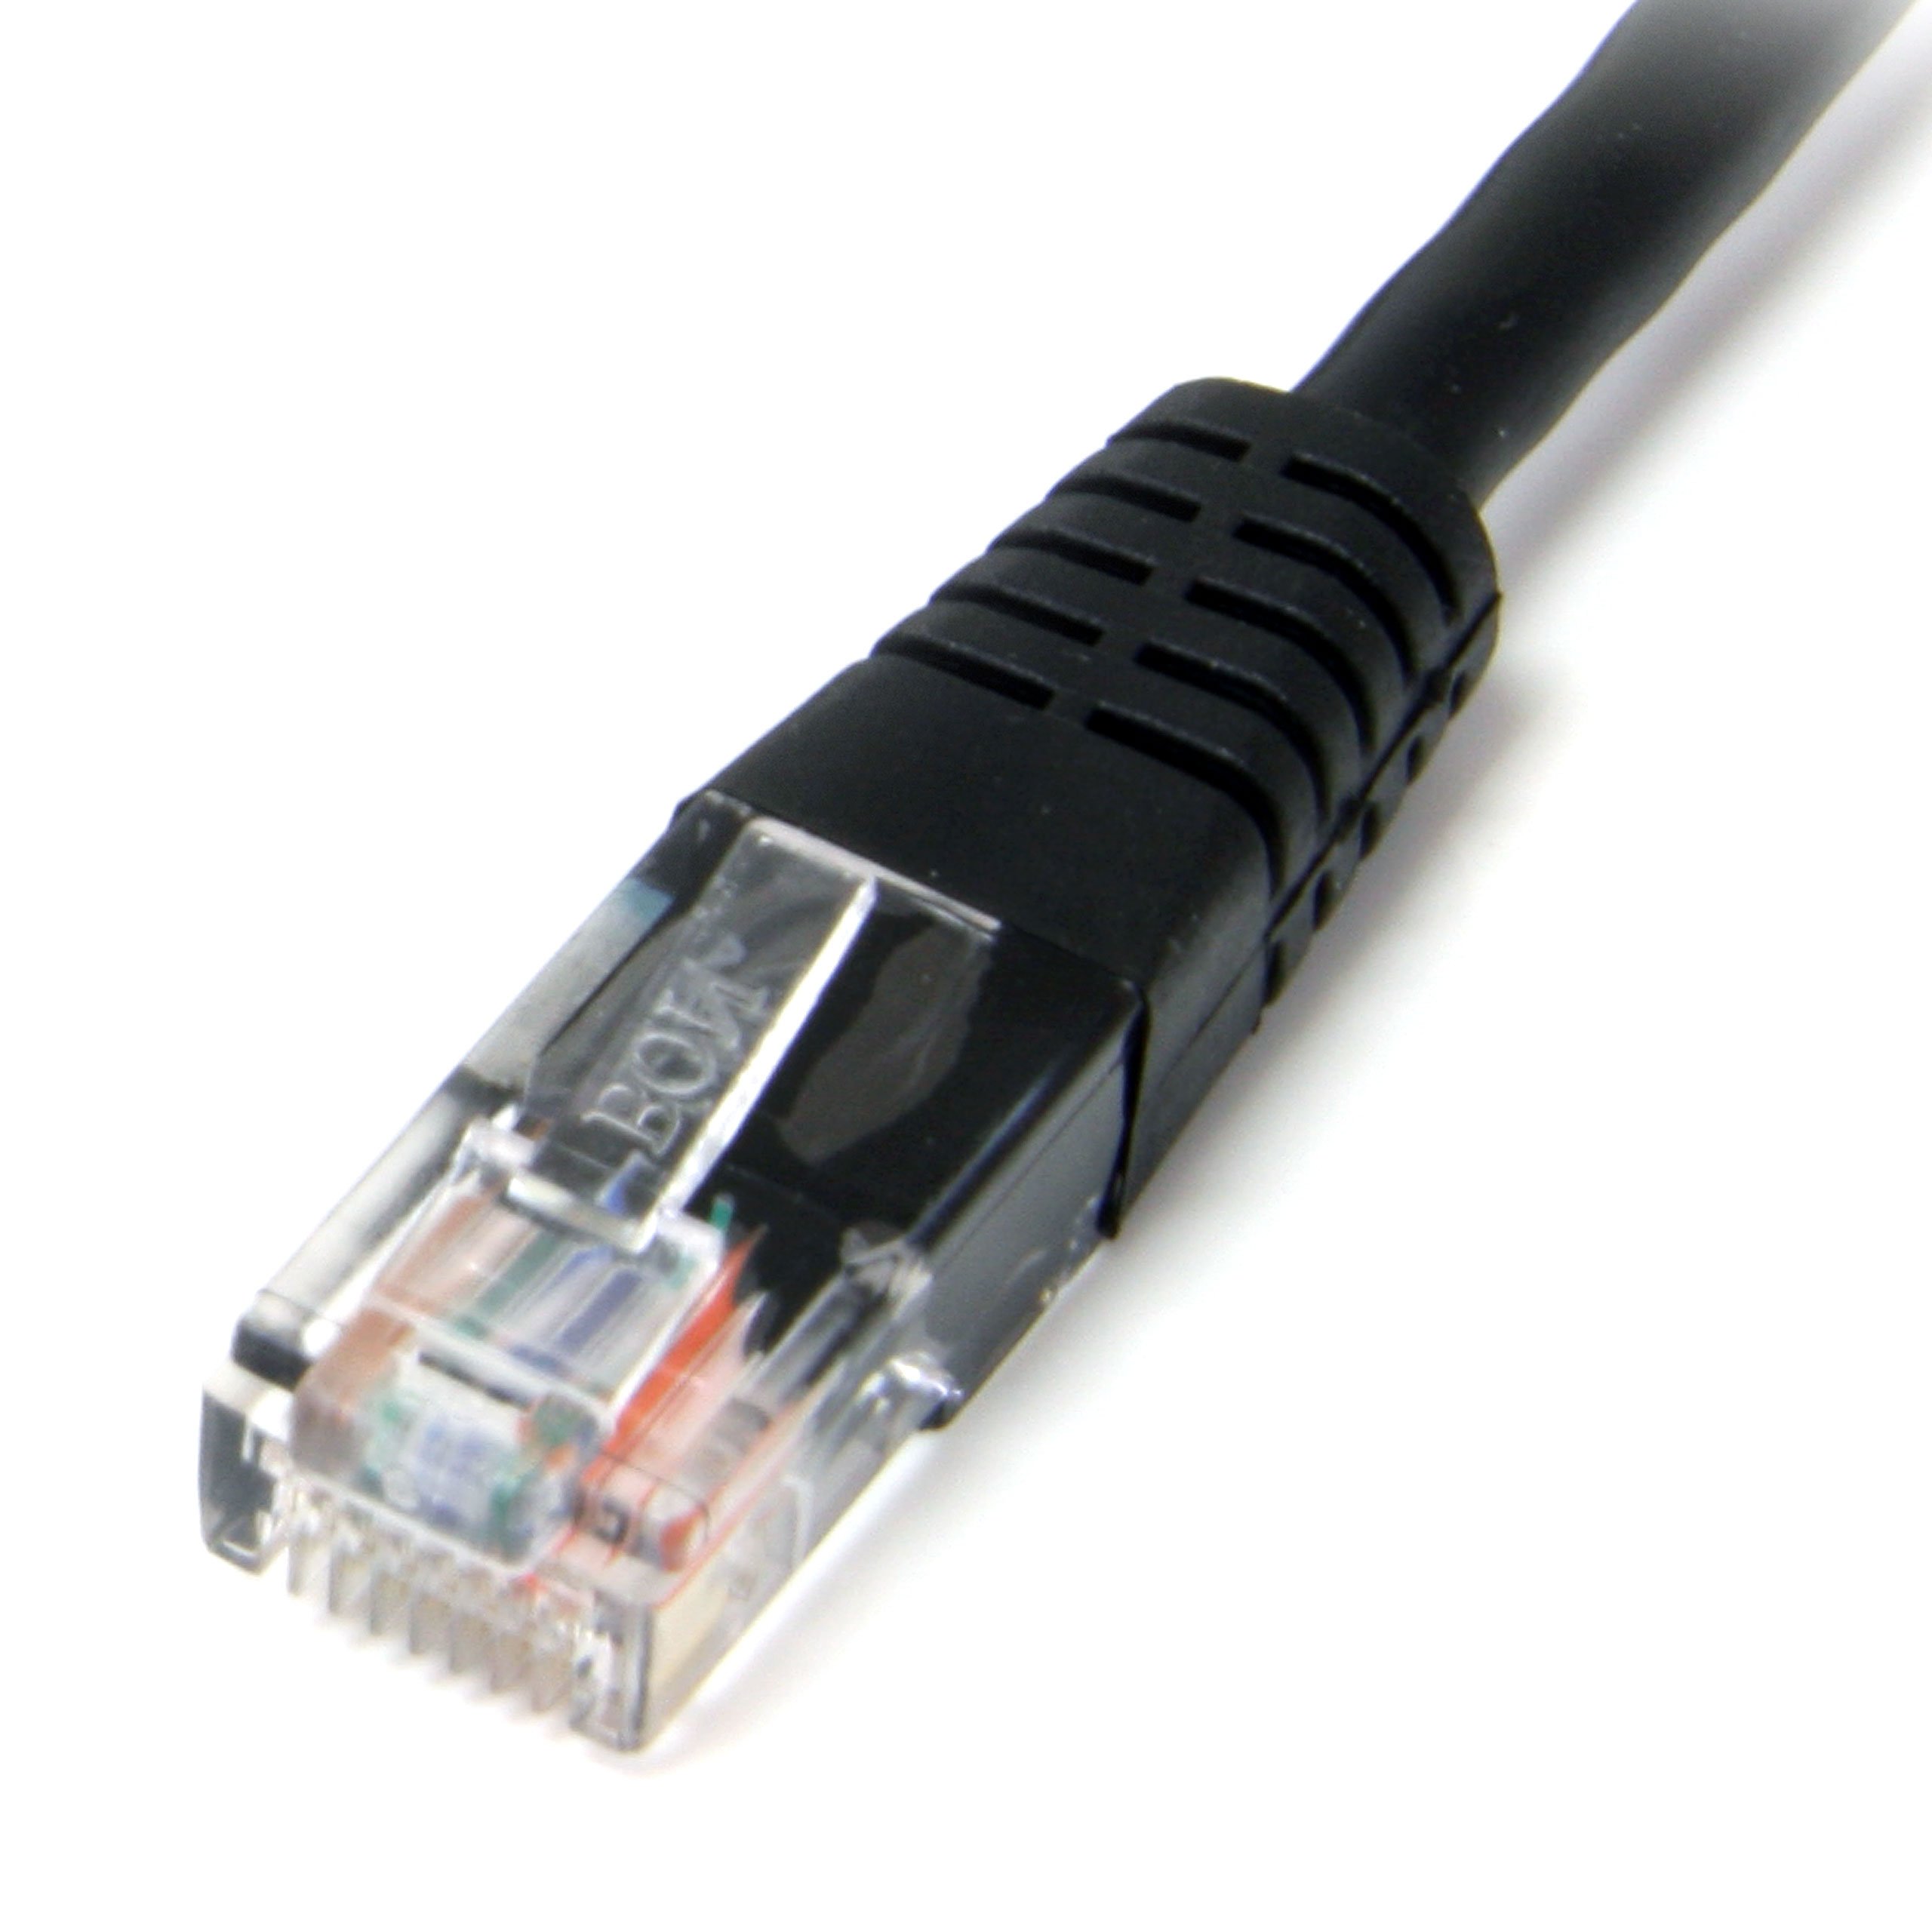 StarTech.com Cat5e Ethernet Cable - 3 ft - Black - Patch Cable - Molded Cat5e Cable - Short Network Cable - Ethernet Cord - Cat 5e Cable - 3ft (M45PATCH3BK)